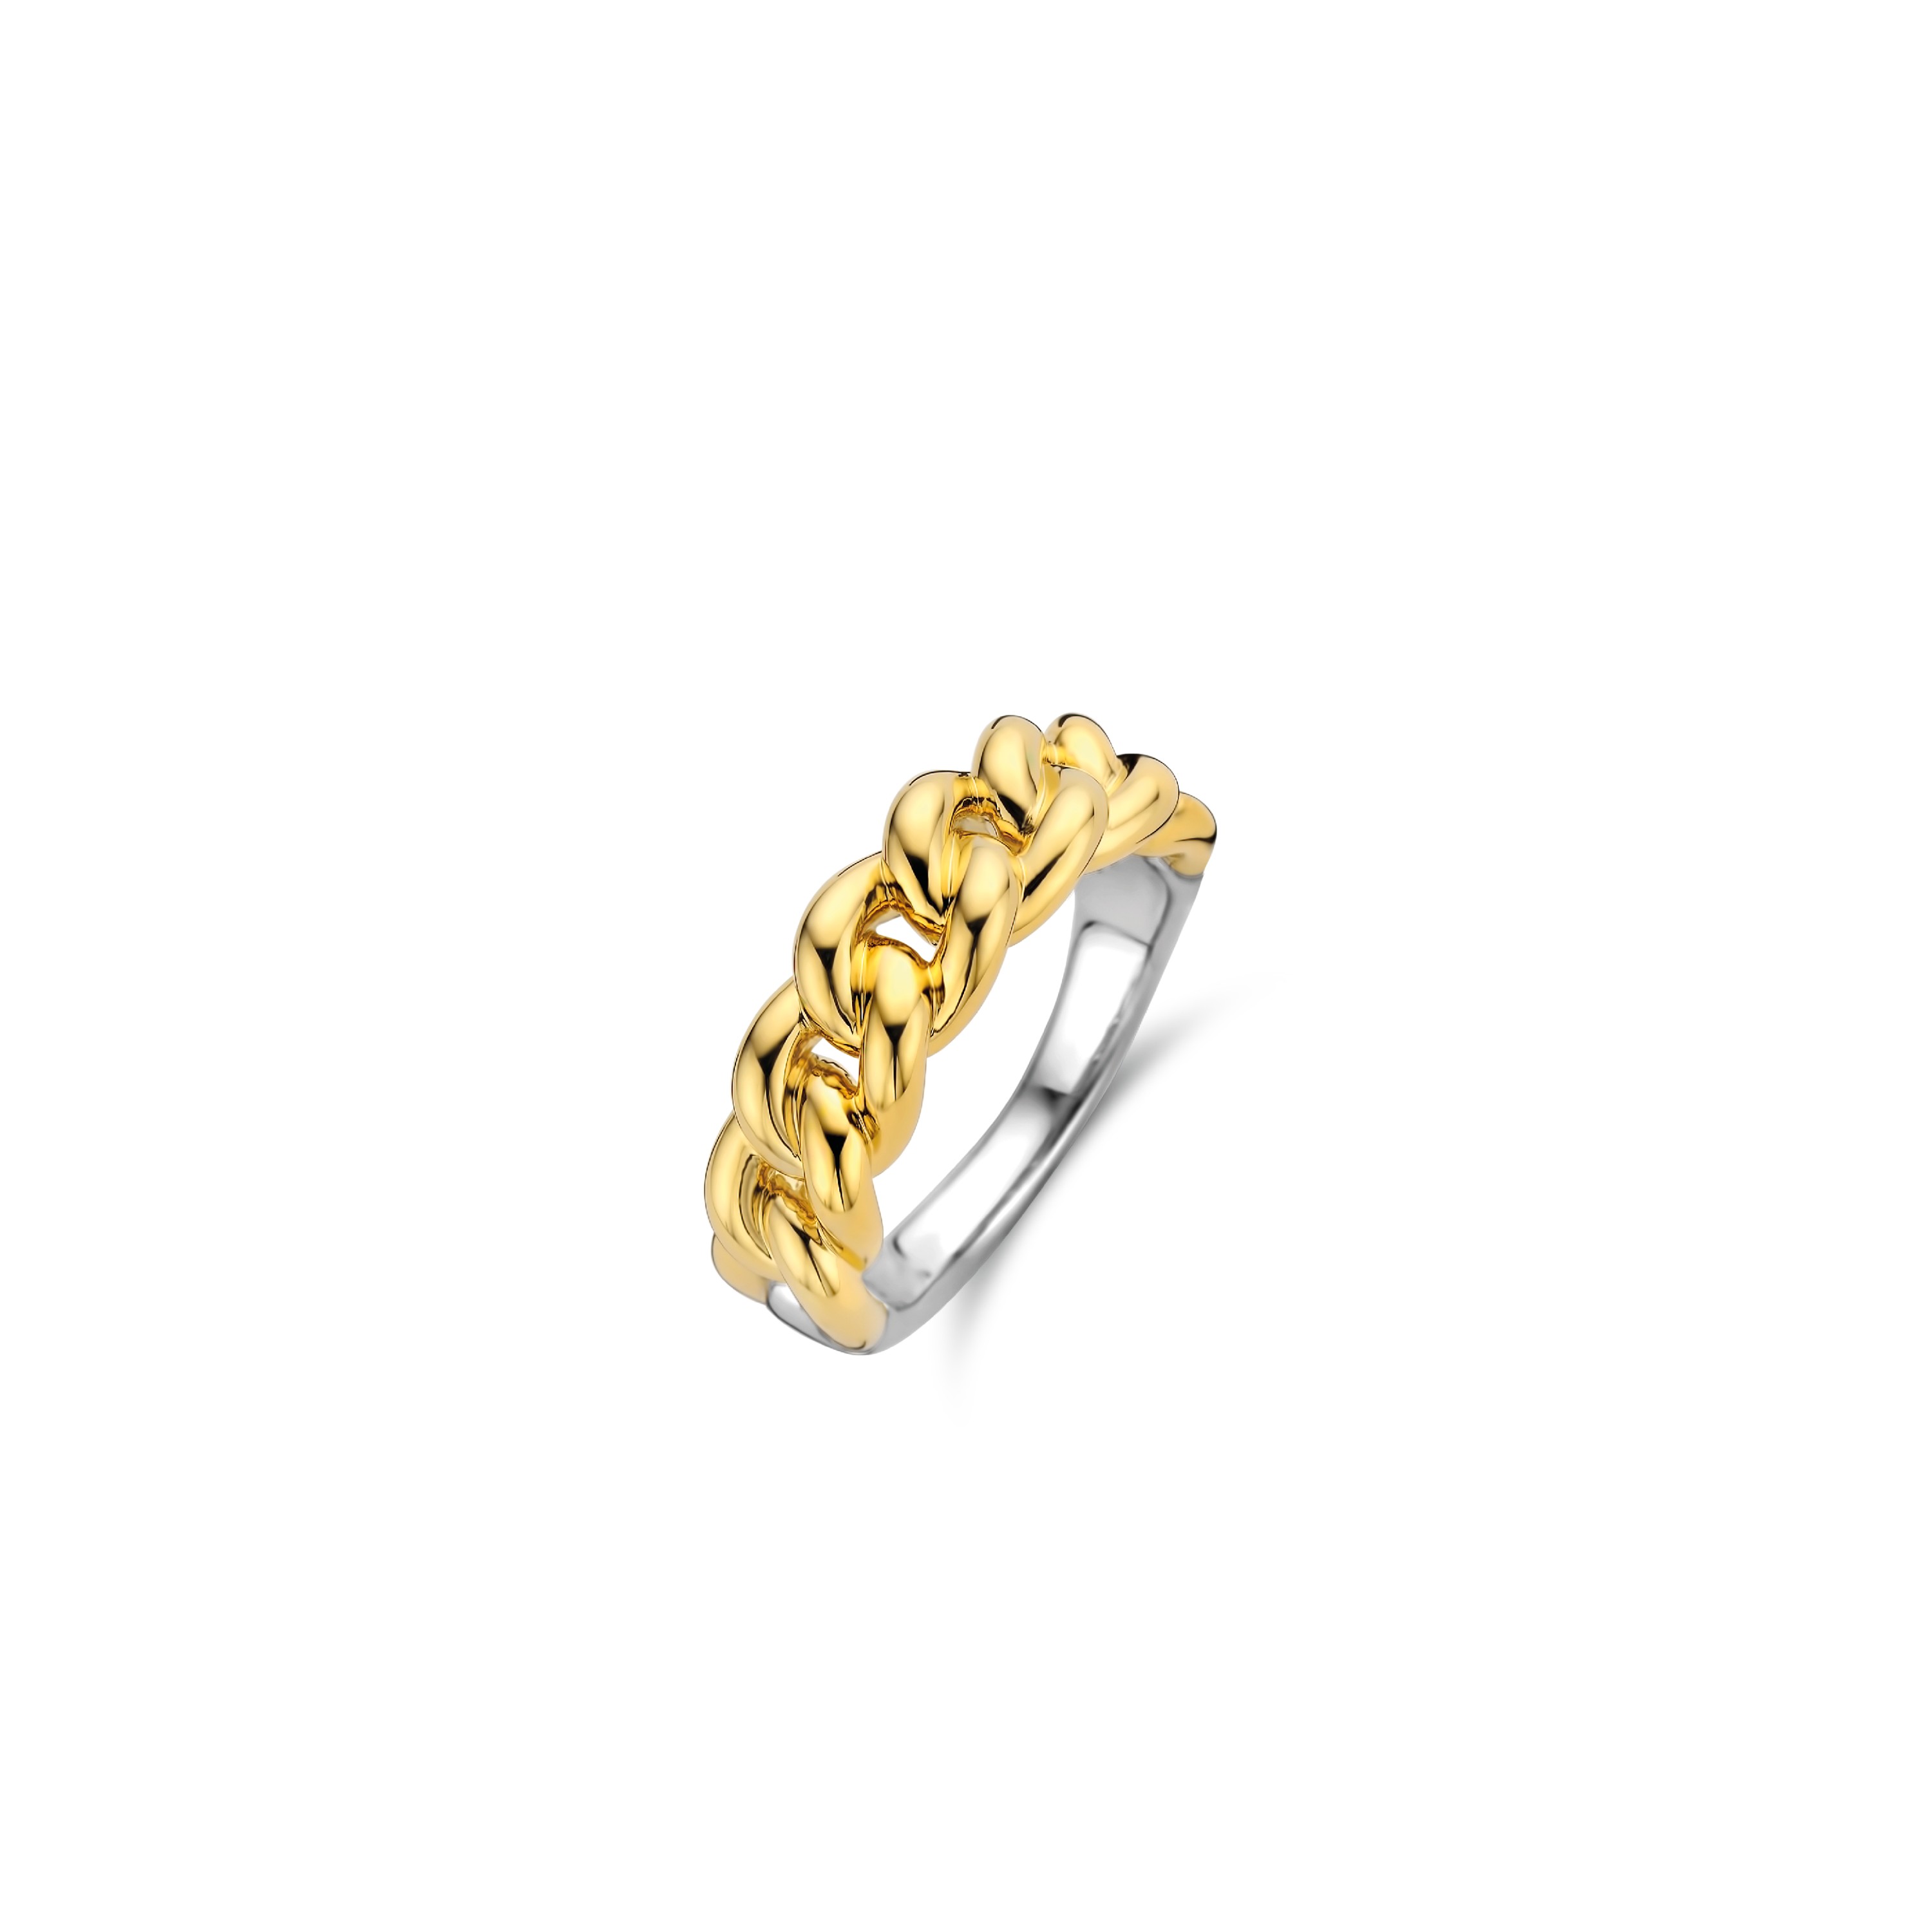 TI SENTO - Milano Ring 12209SY Gala Jewelers Inc. White Oak, PA